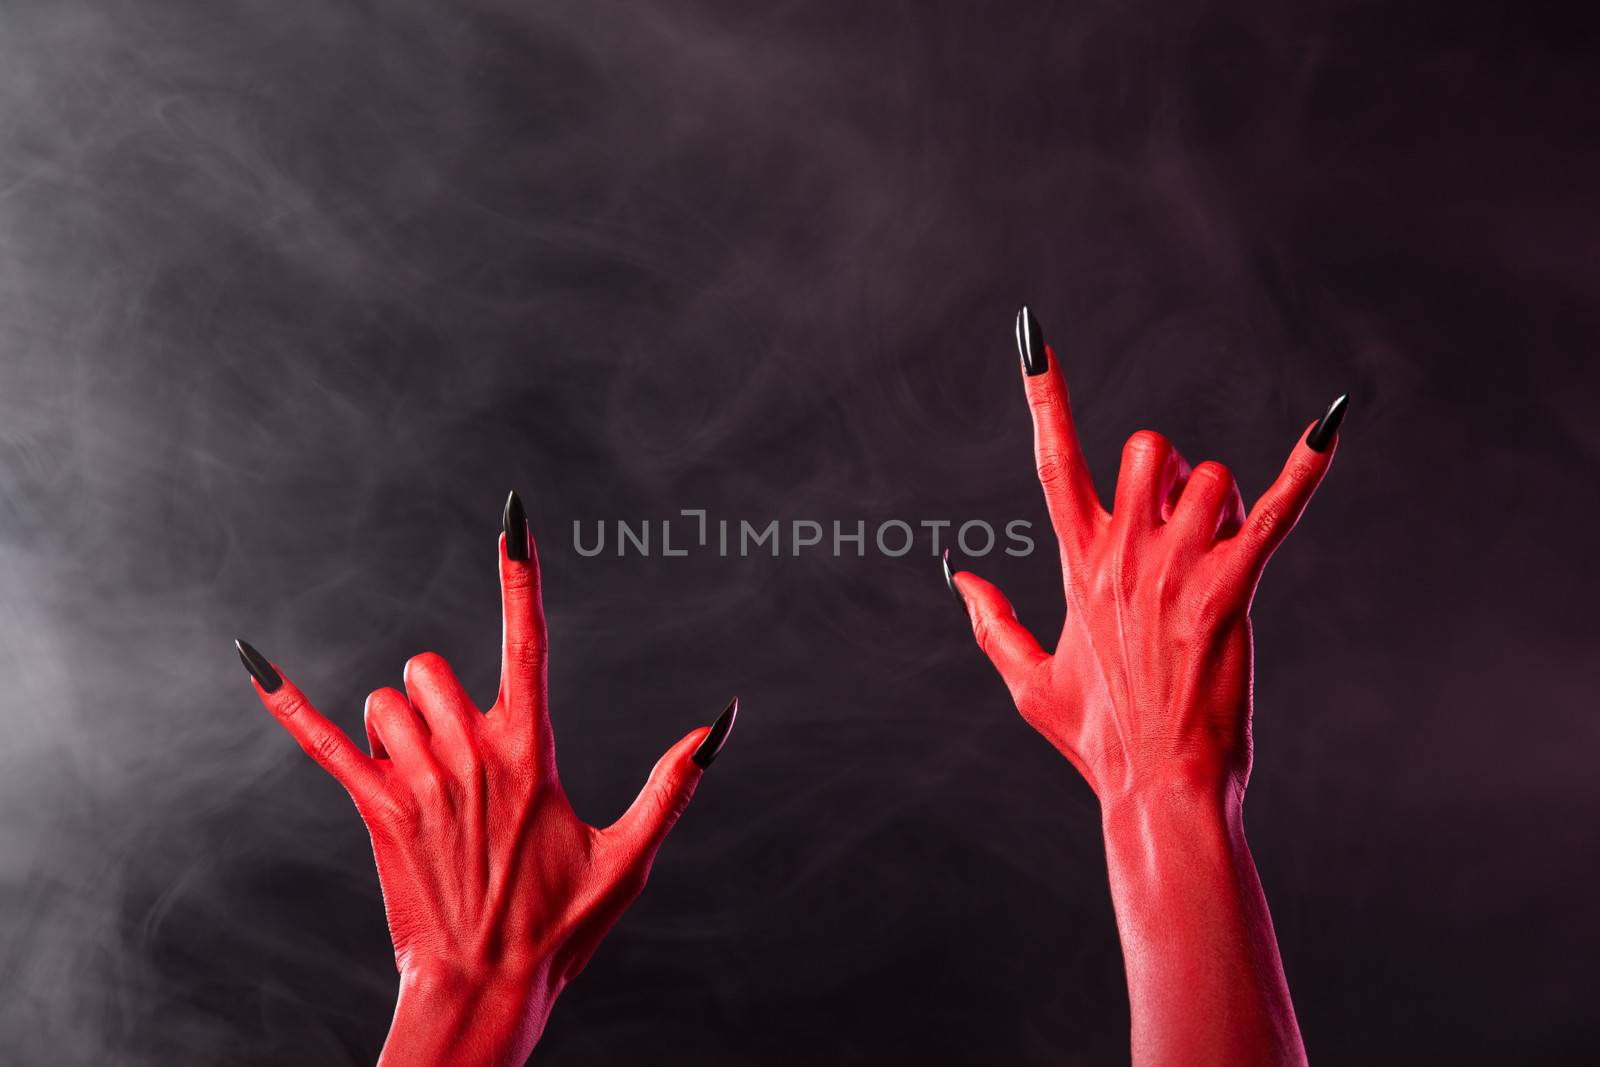 Red devil hands showing heavy metal gesture, studio shot on smoky background 